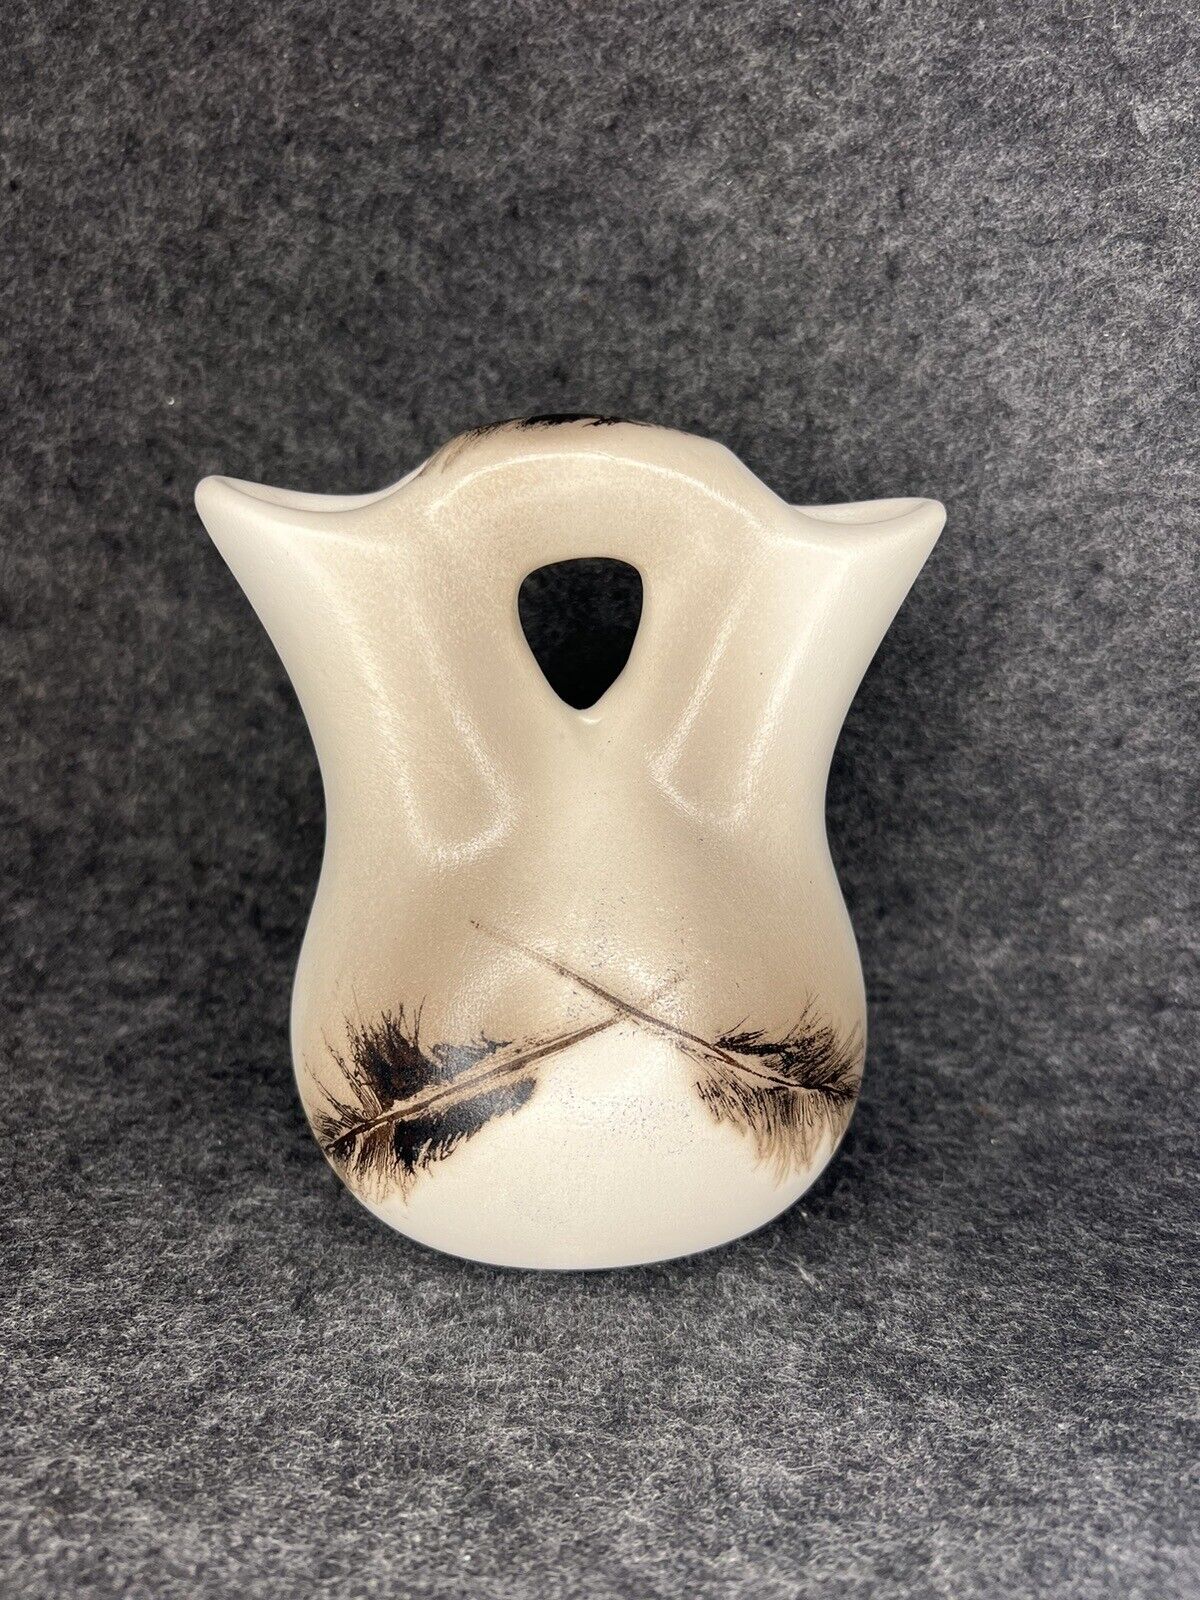 Handmade Native American Wedding Vase - Signed - Origins Made in South Dakota